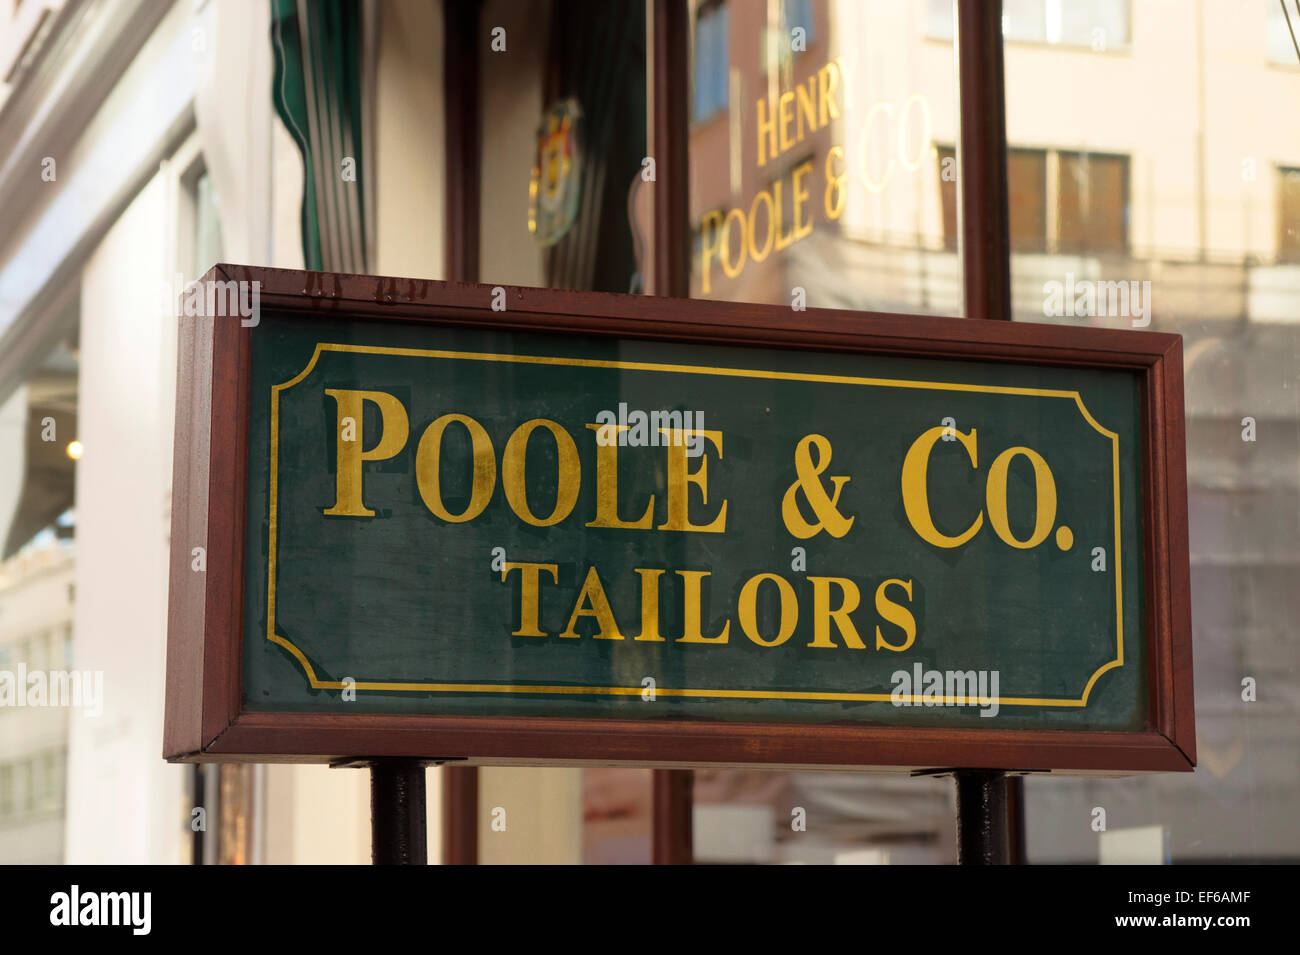 poole and co tailors Savile Row London Stock Photo